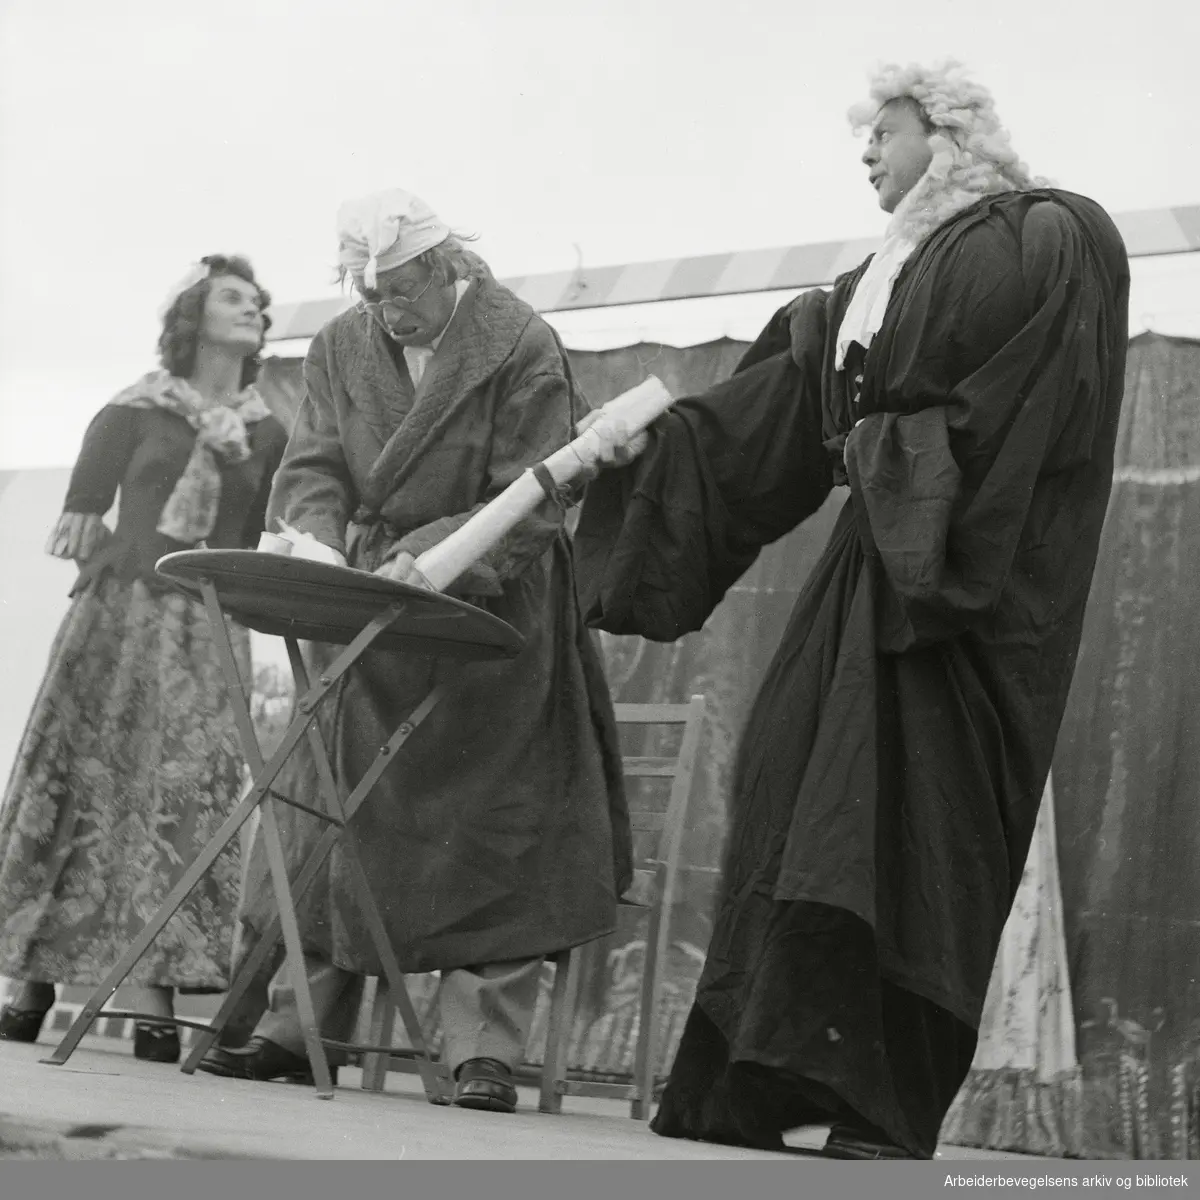 Oslo kommunes parkkvelder. "Cabaret Carl Johan" med Eva Gustavson, Einar Sissener og Per Aabel. Torshovdalen, 6. August 1951..